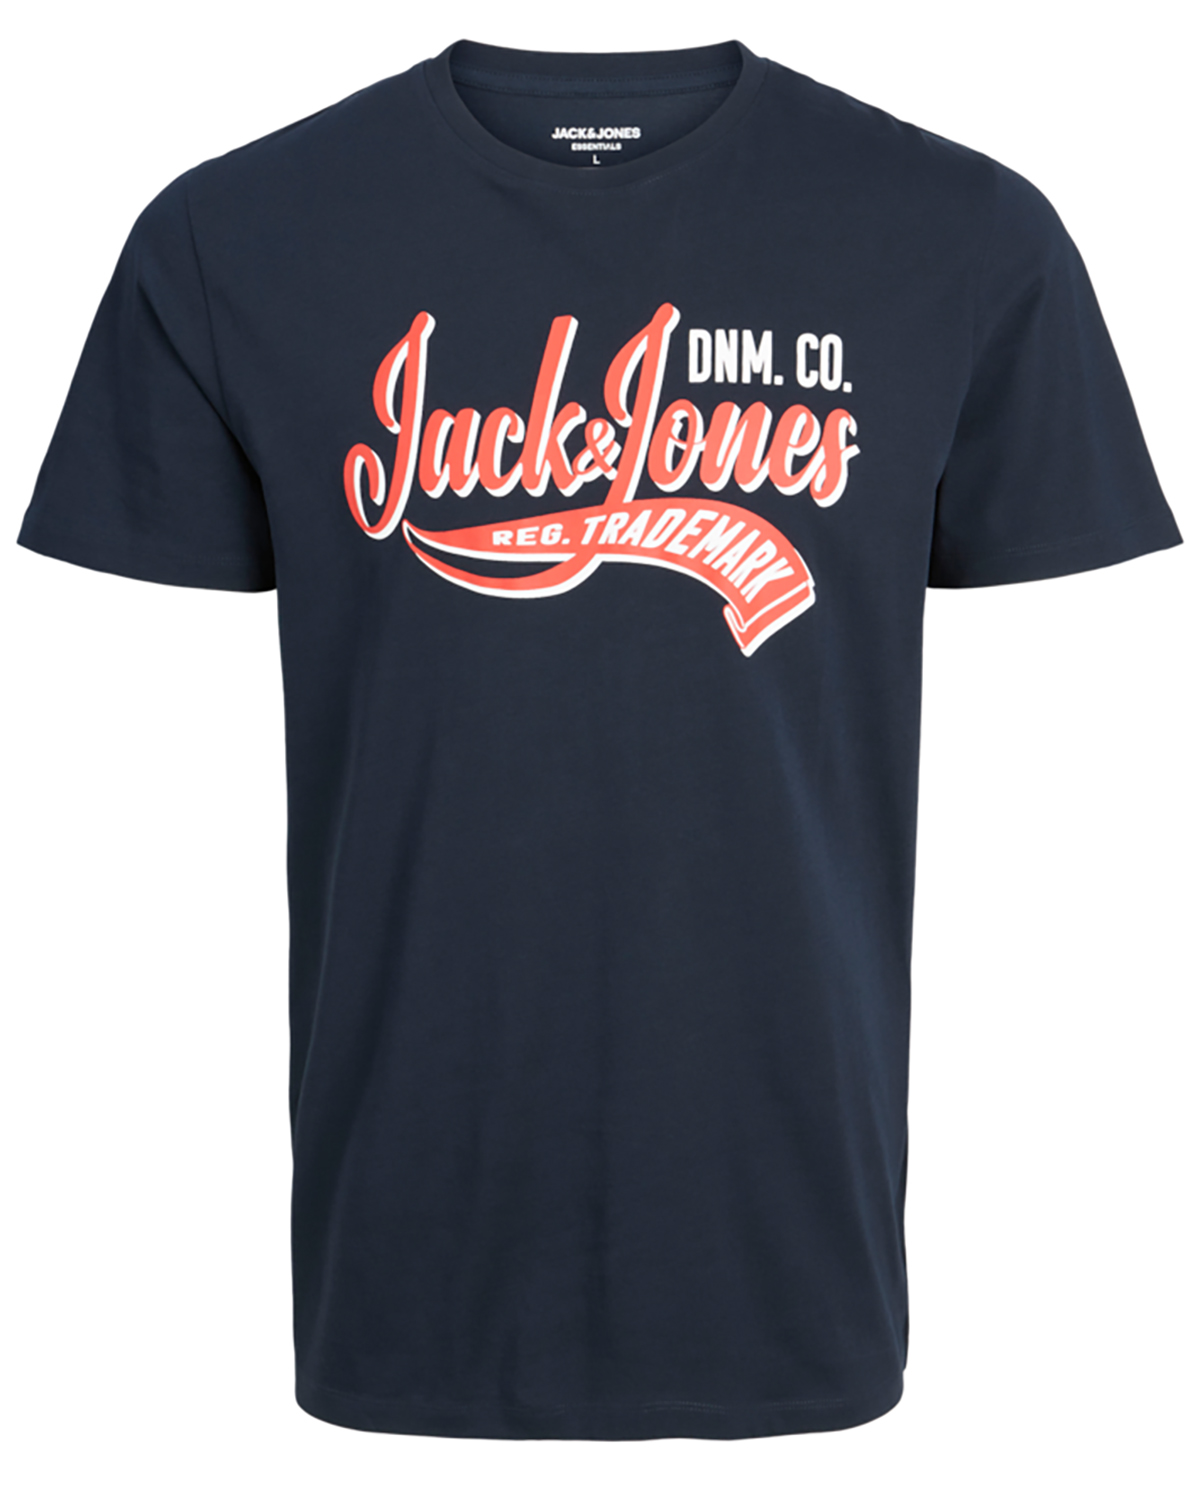 Se Jack & Jones JR t-shirt s/s, Logo tee, navy - 164,14år hos Umame.dk